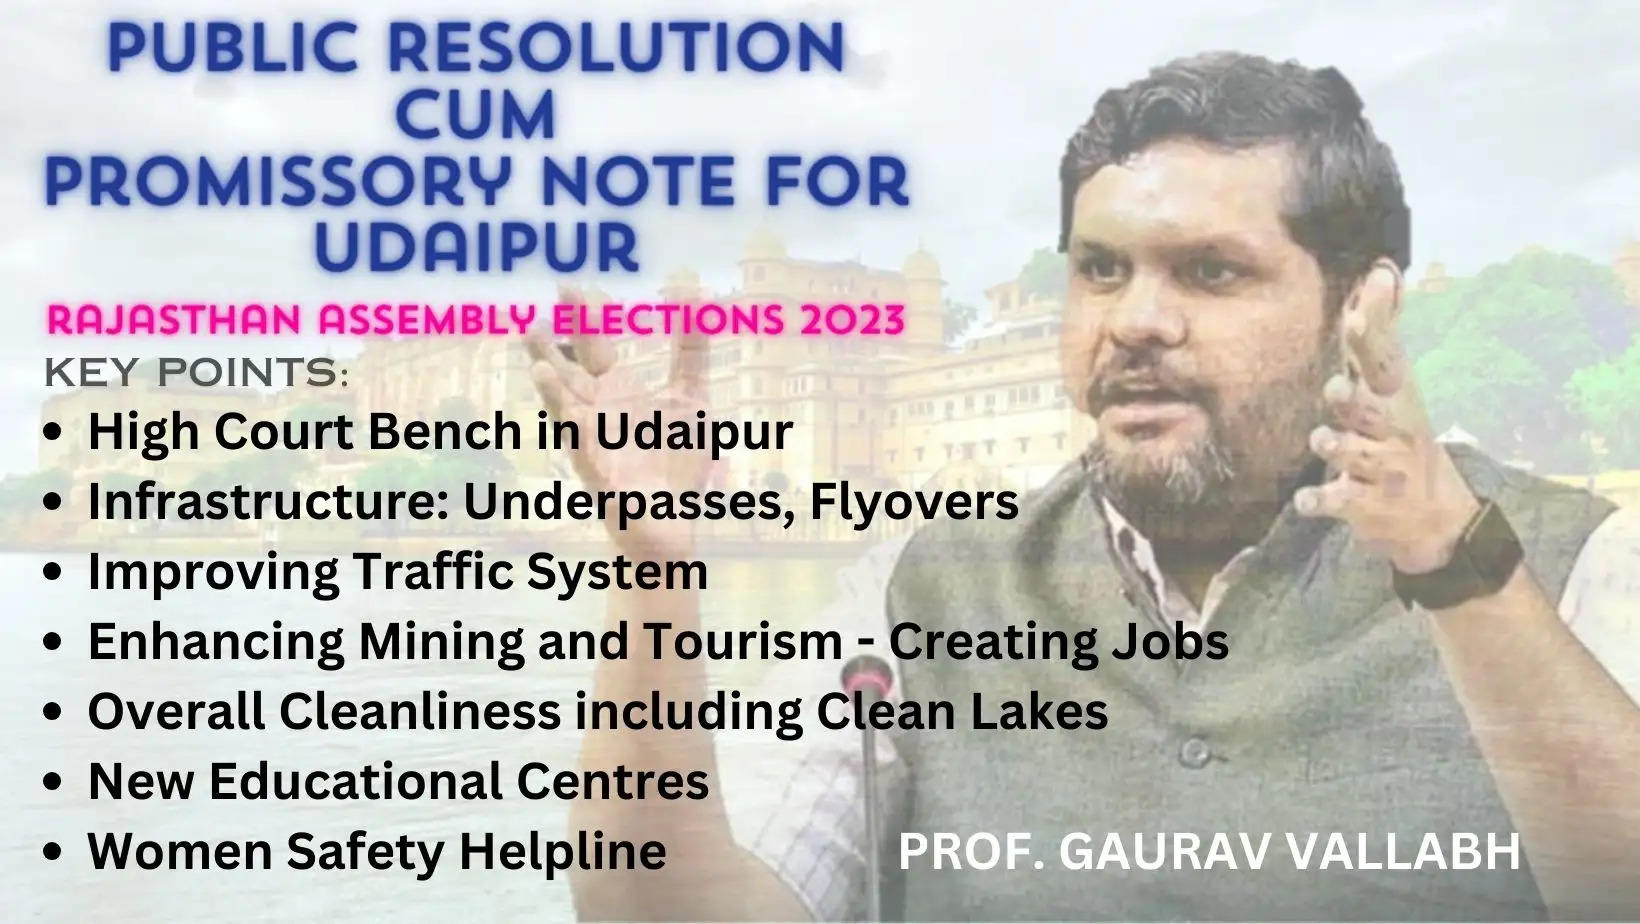 Public Resolution cum Promissory Note for Udaipur